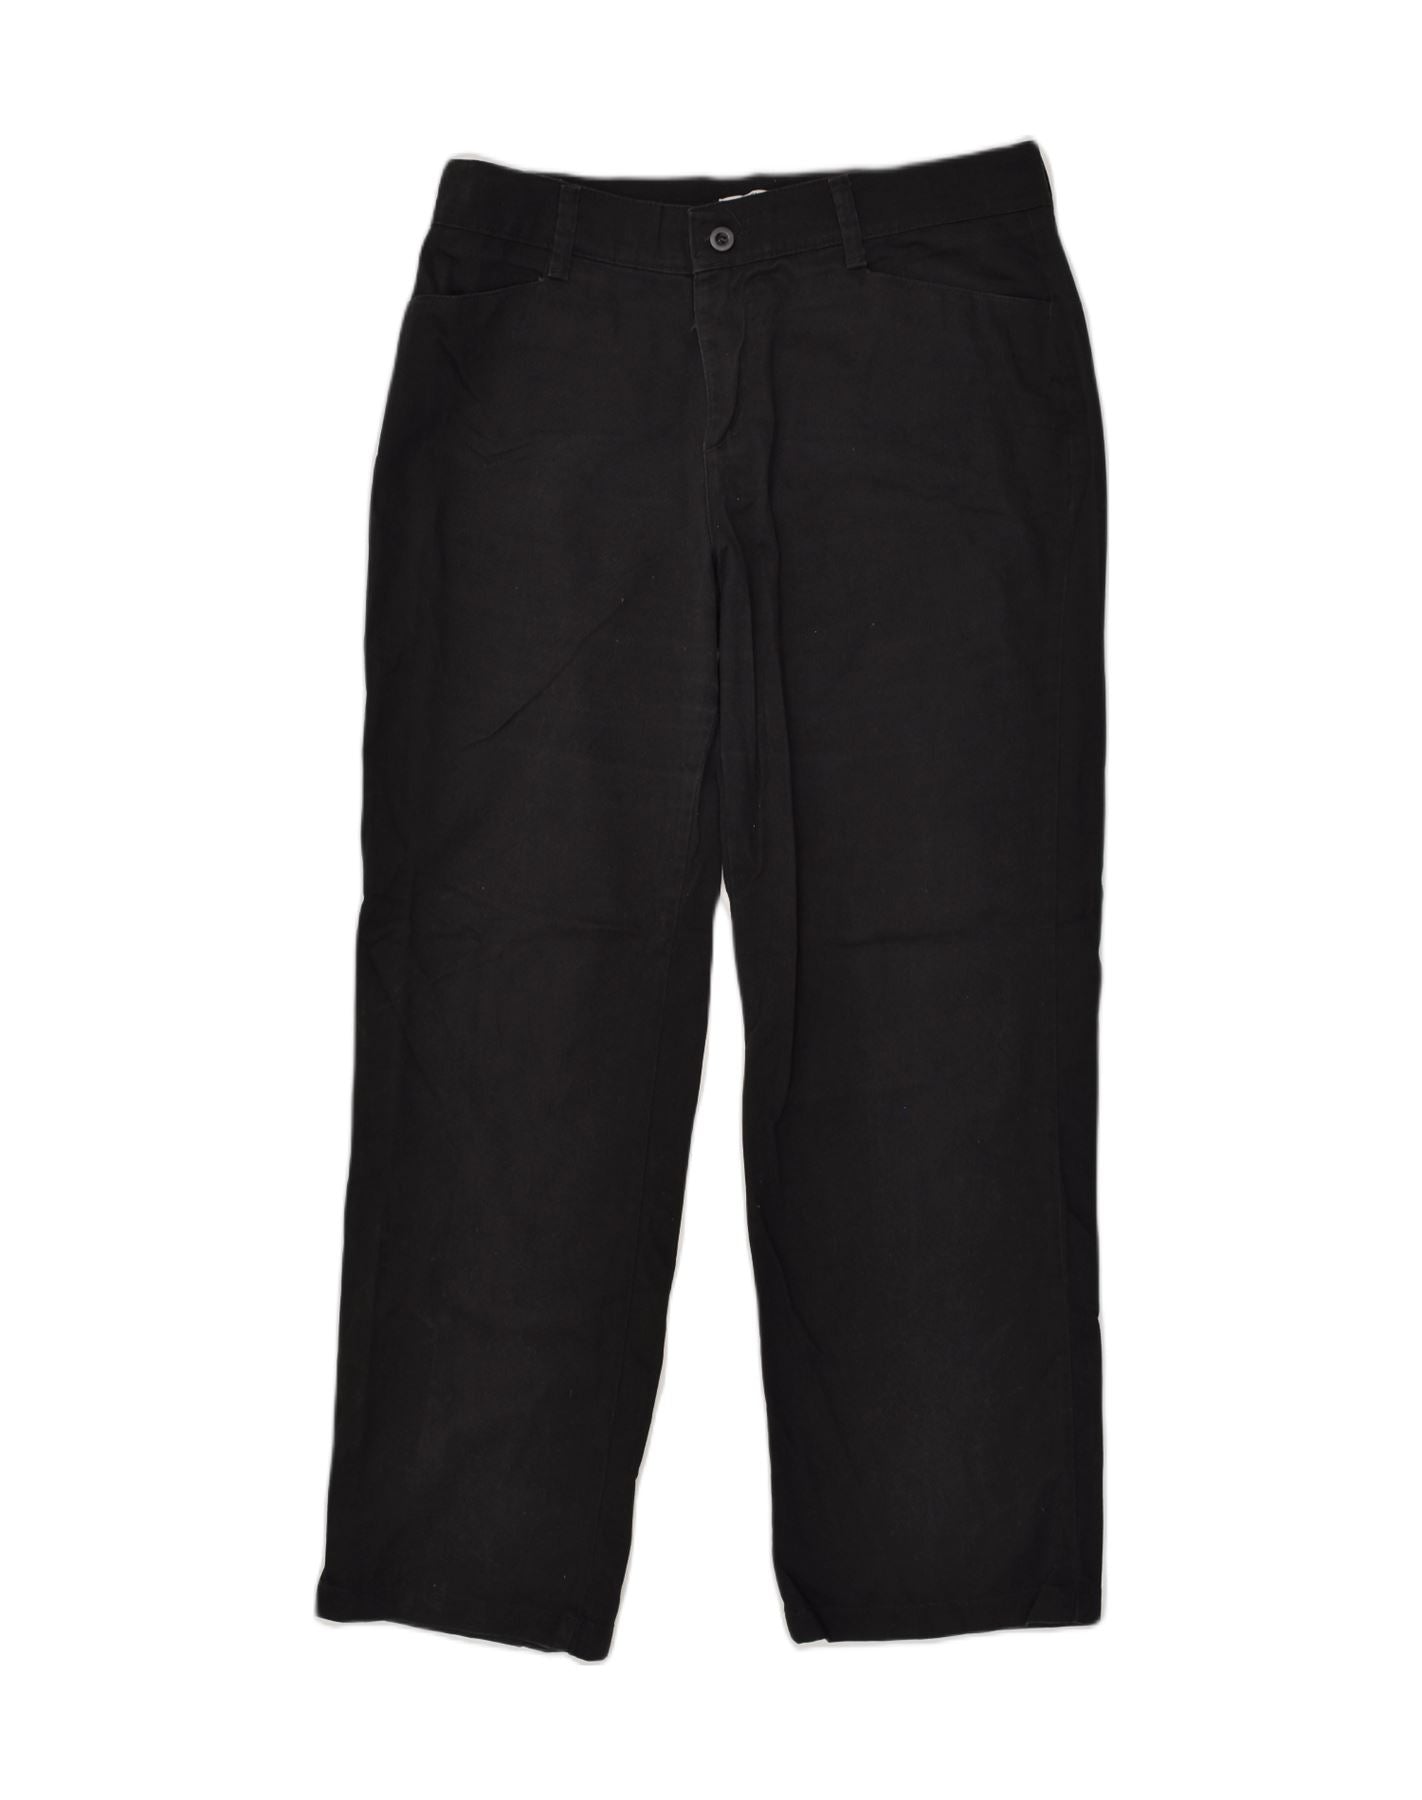 Buy Anne Klein women solid flare dress pants black Online | Brands For Less